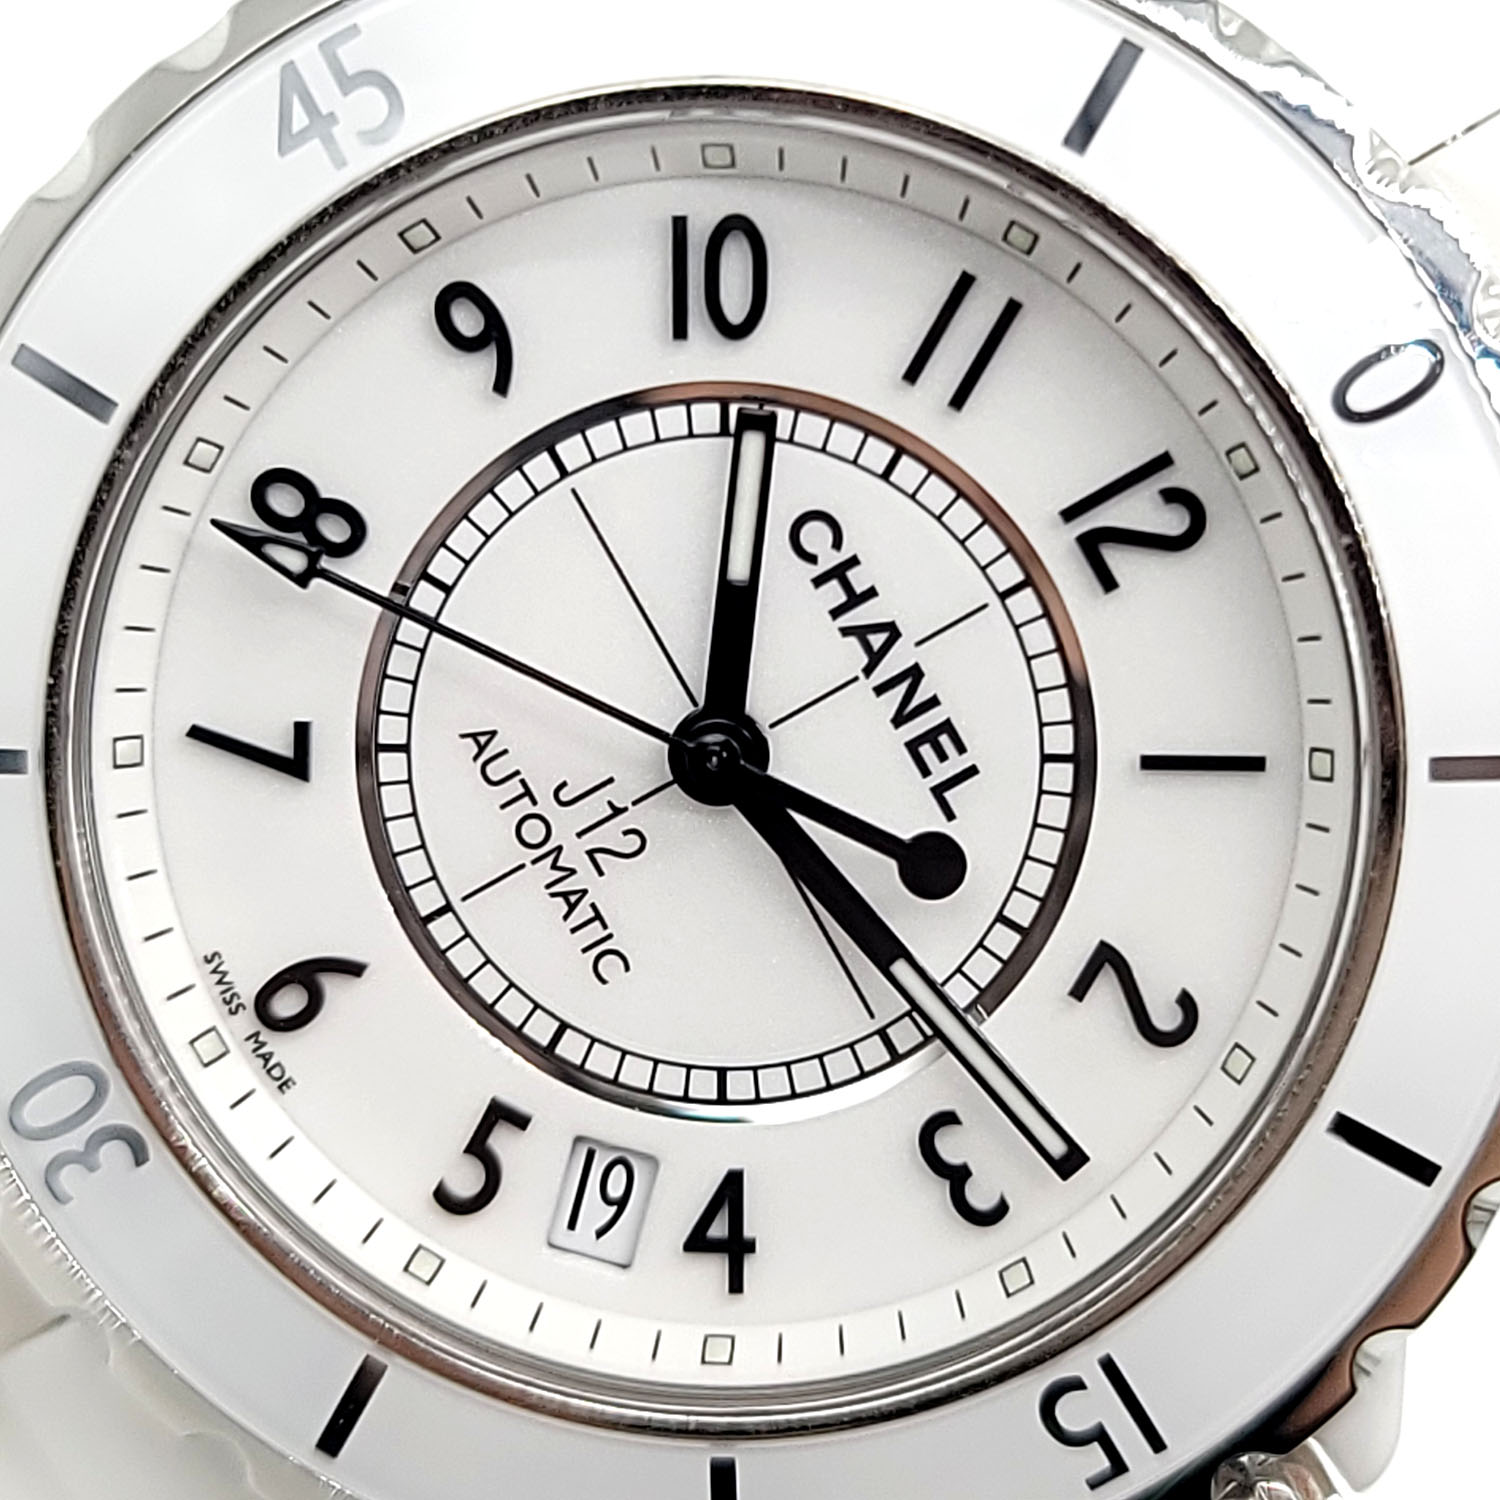 Chanel J12 Automatic Unisex Watch 38mm White Ceramic